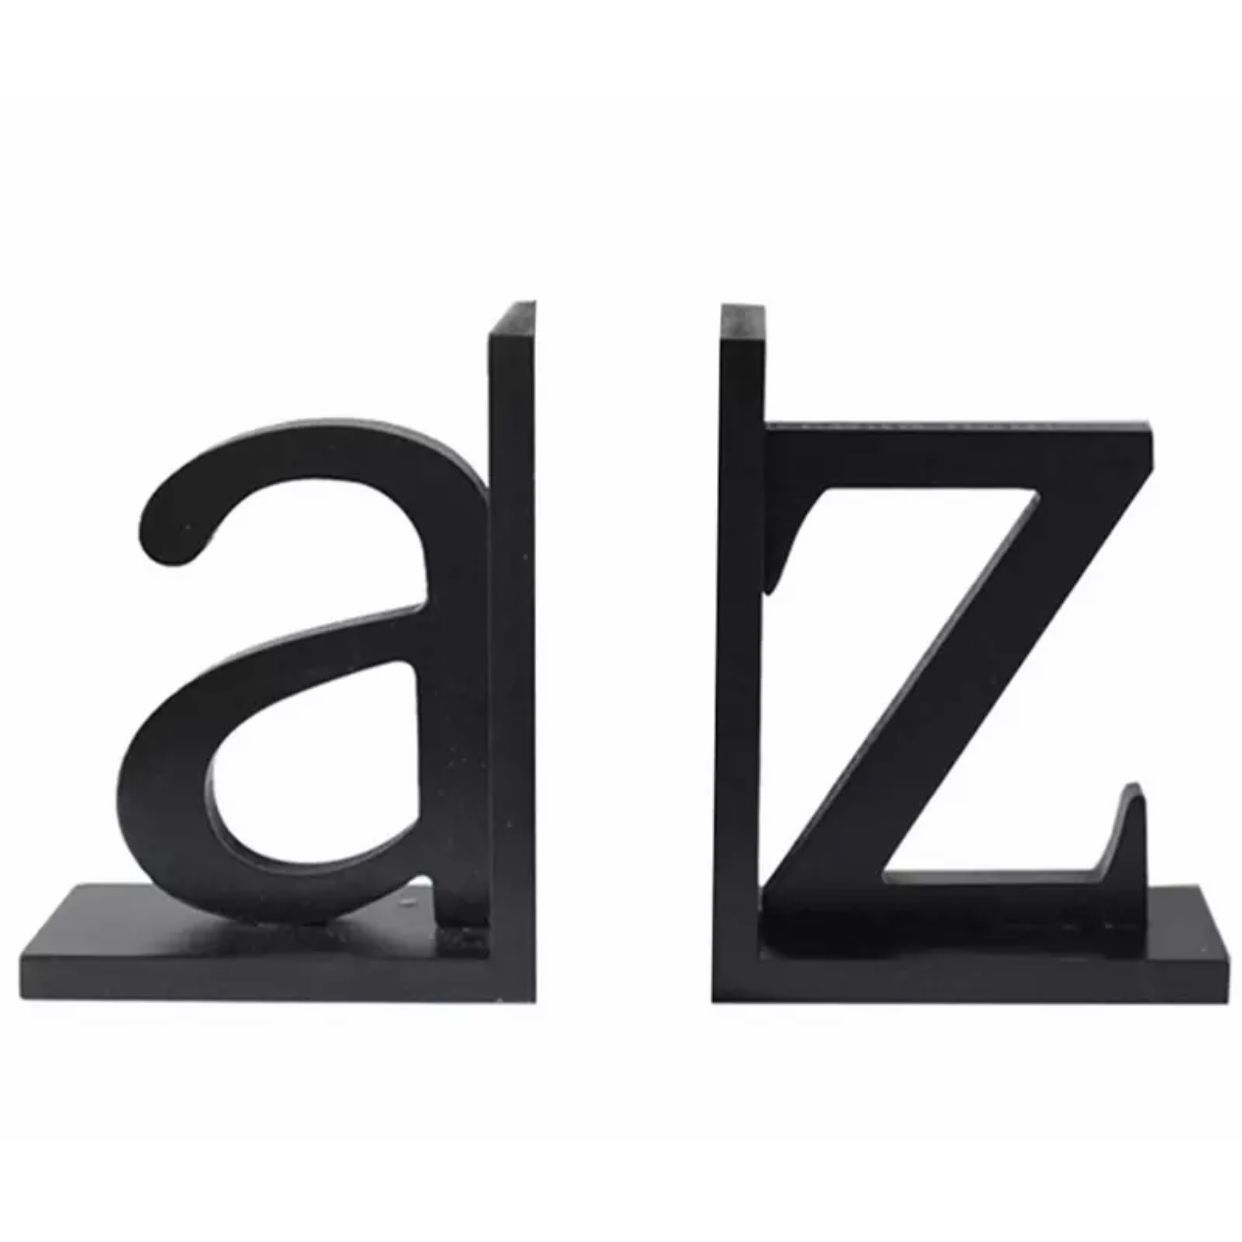 A to Z wooden Home Decor / Shelf Rack Arranger / Library Management / Storage